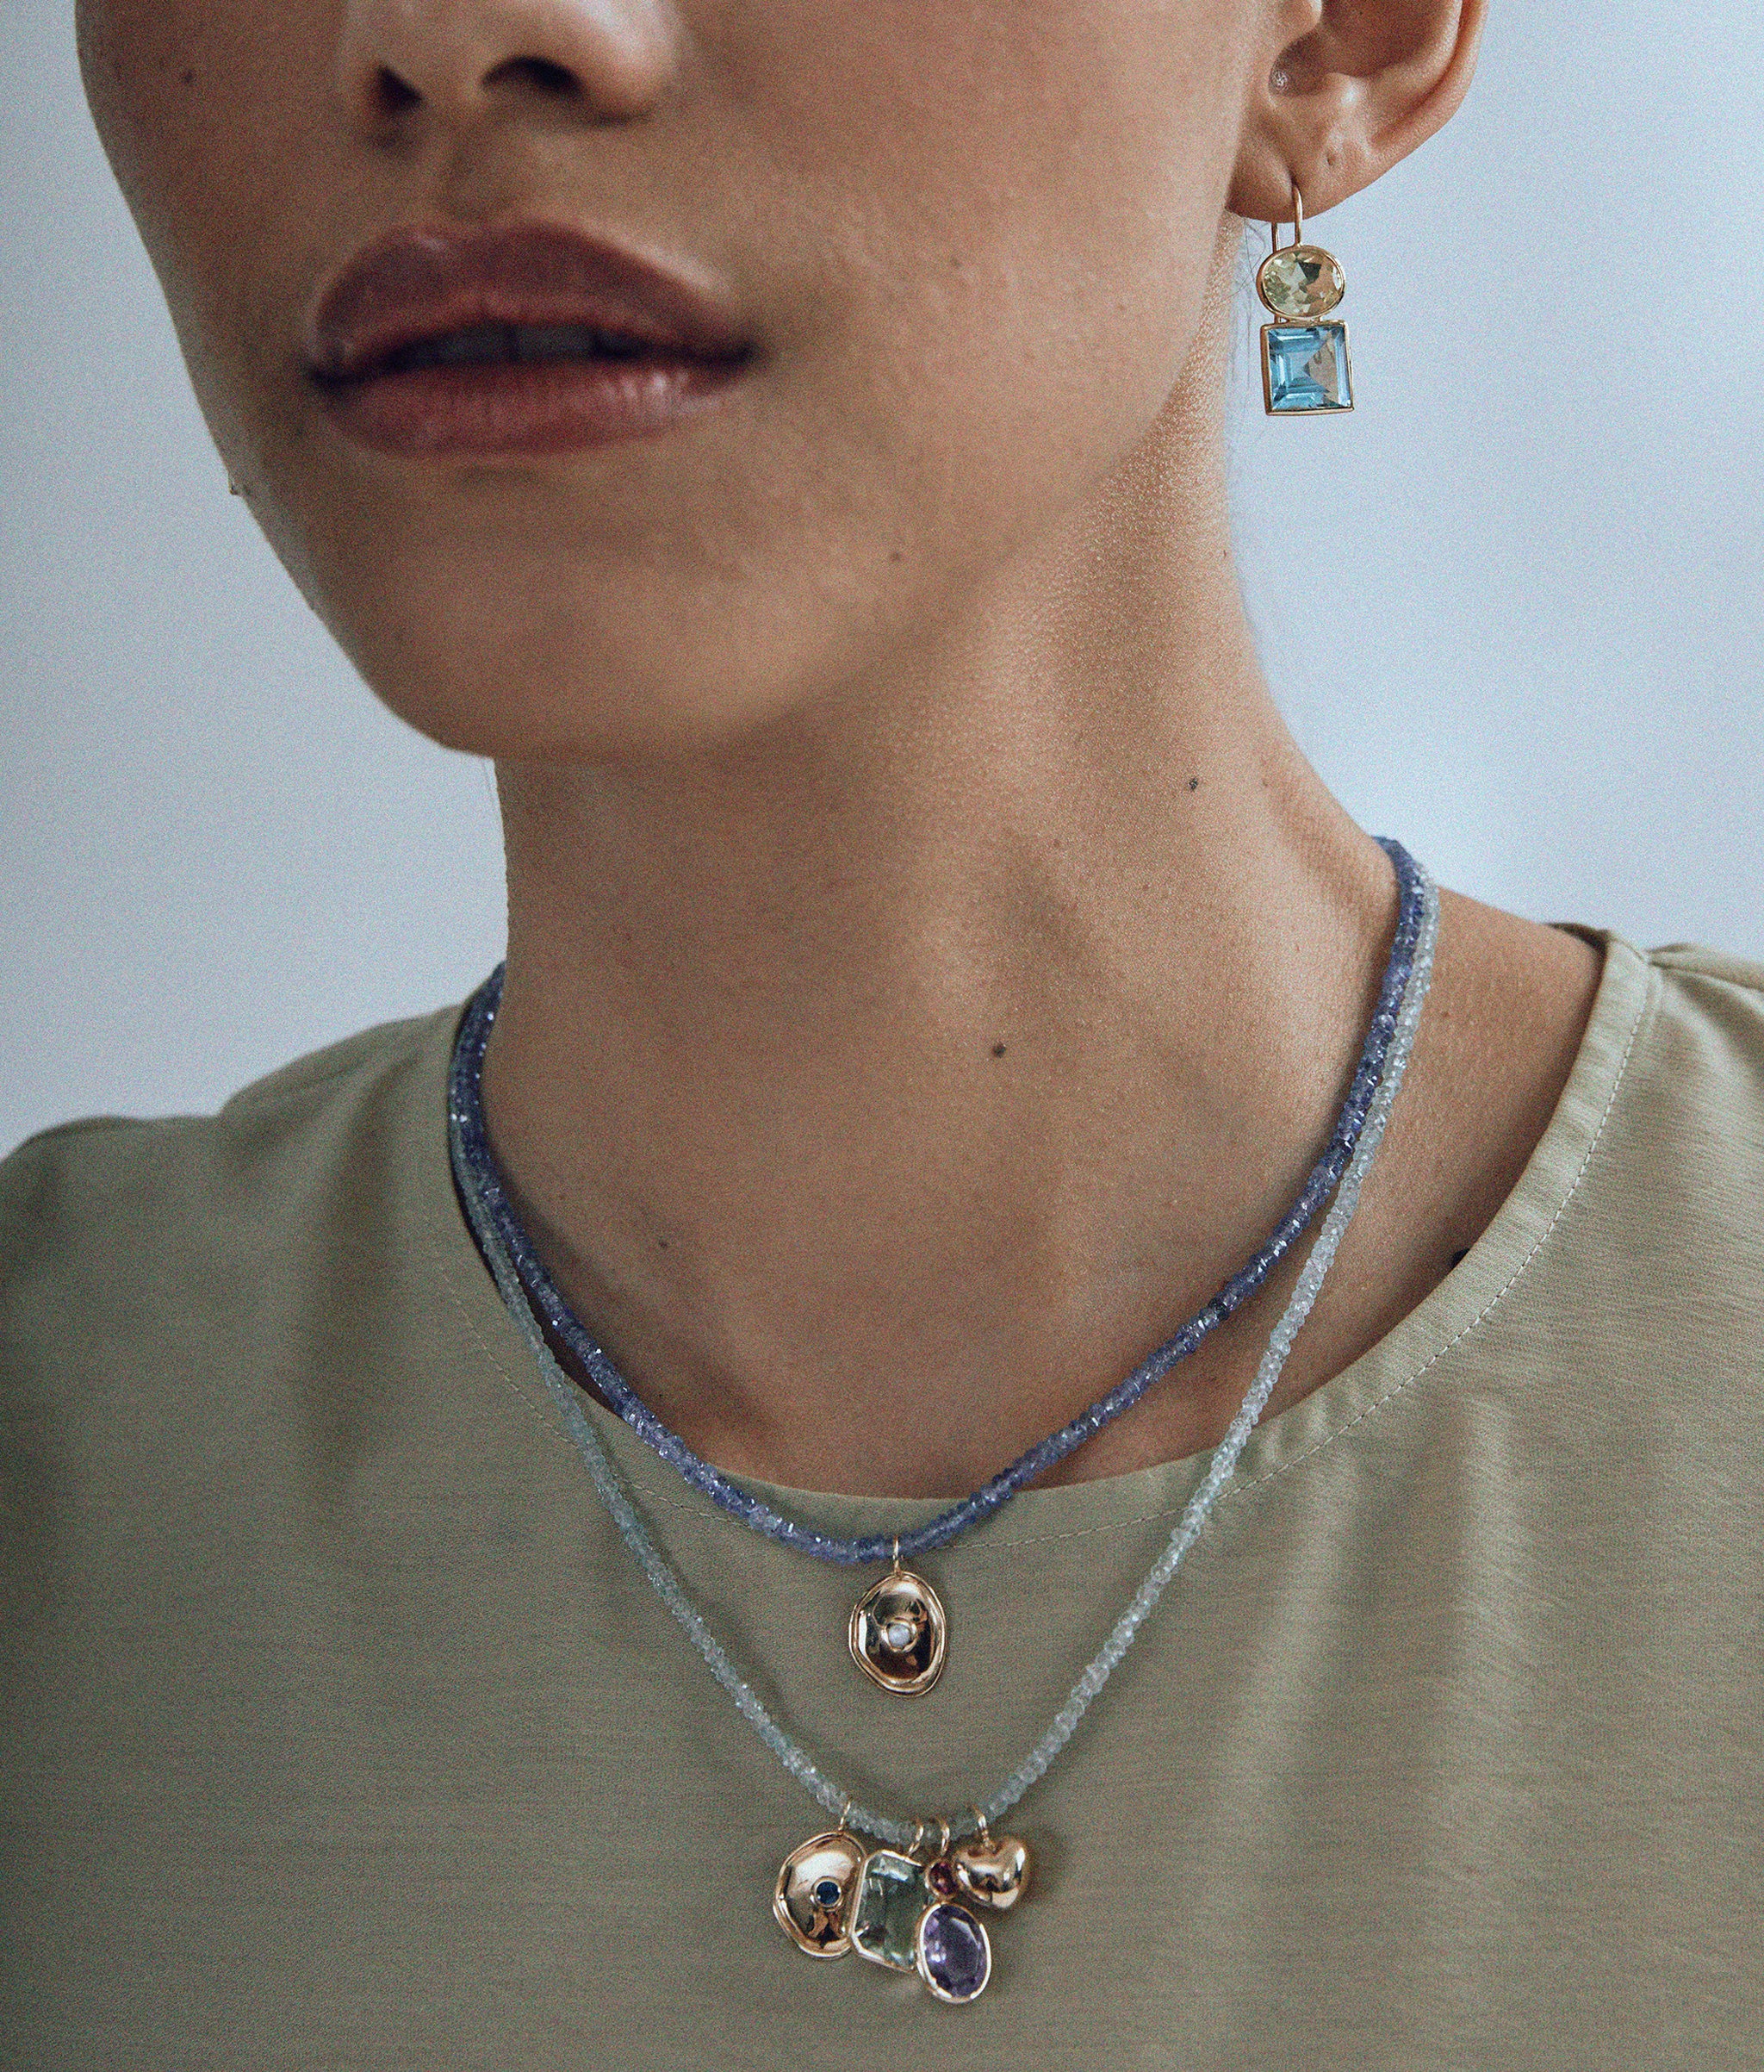 14k Gold Birthstone Necklace Charm in Aquamarine